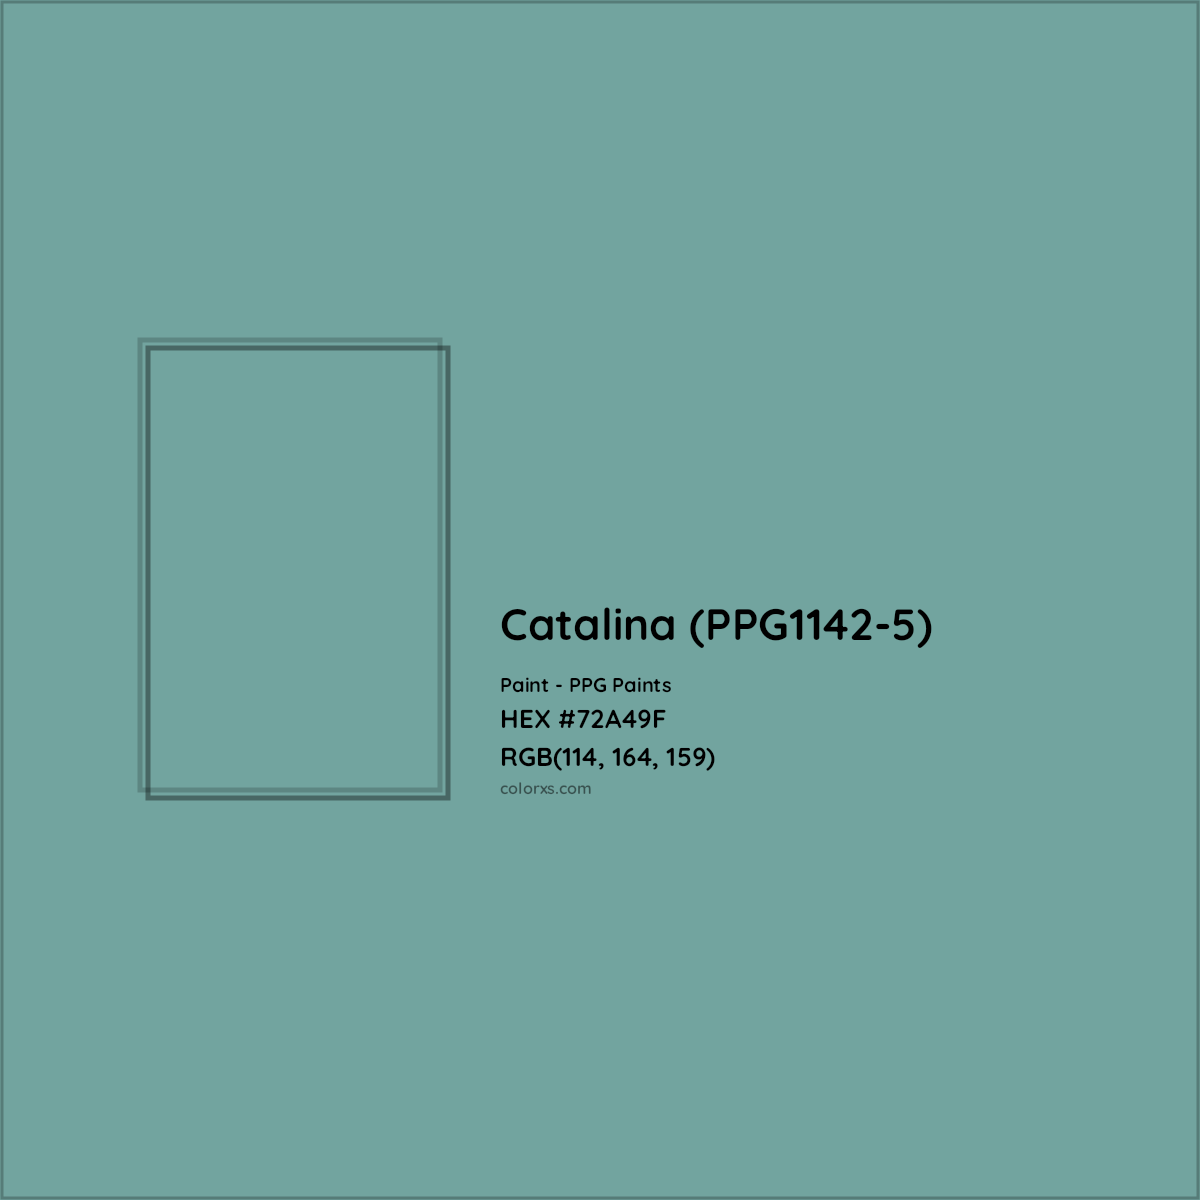 HEX #72A49F Catalina (PPG1142-5) Paint PPG Paints - Color Code